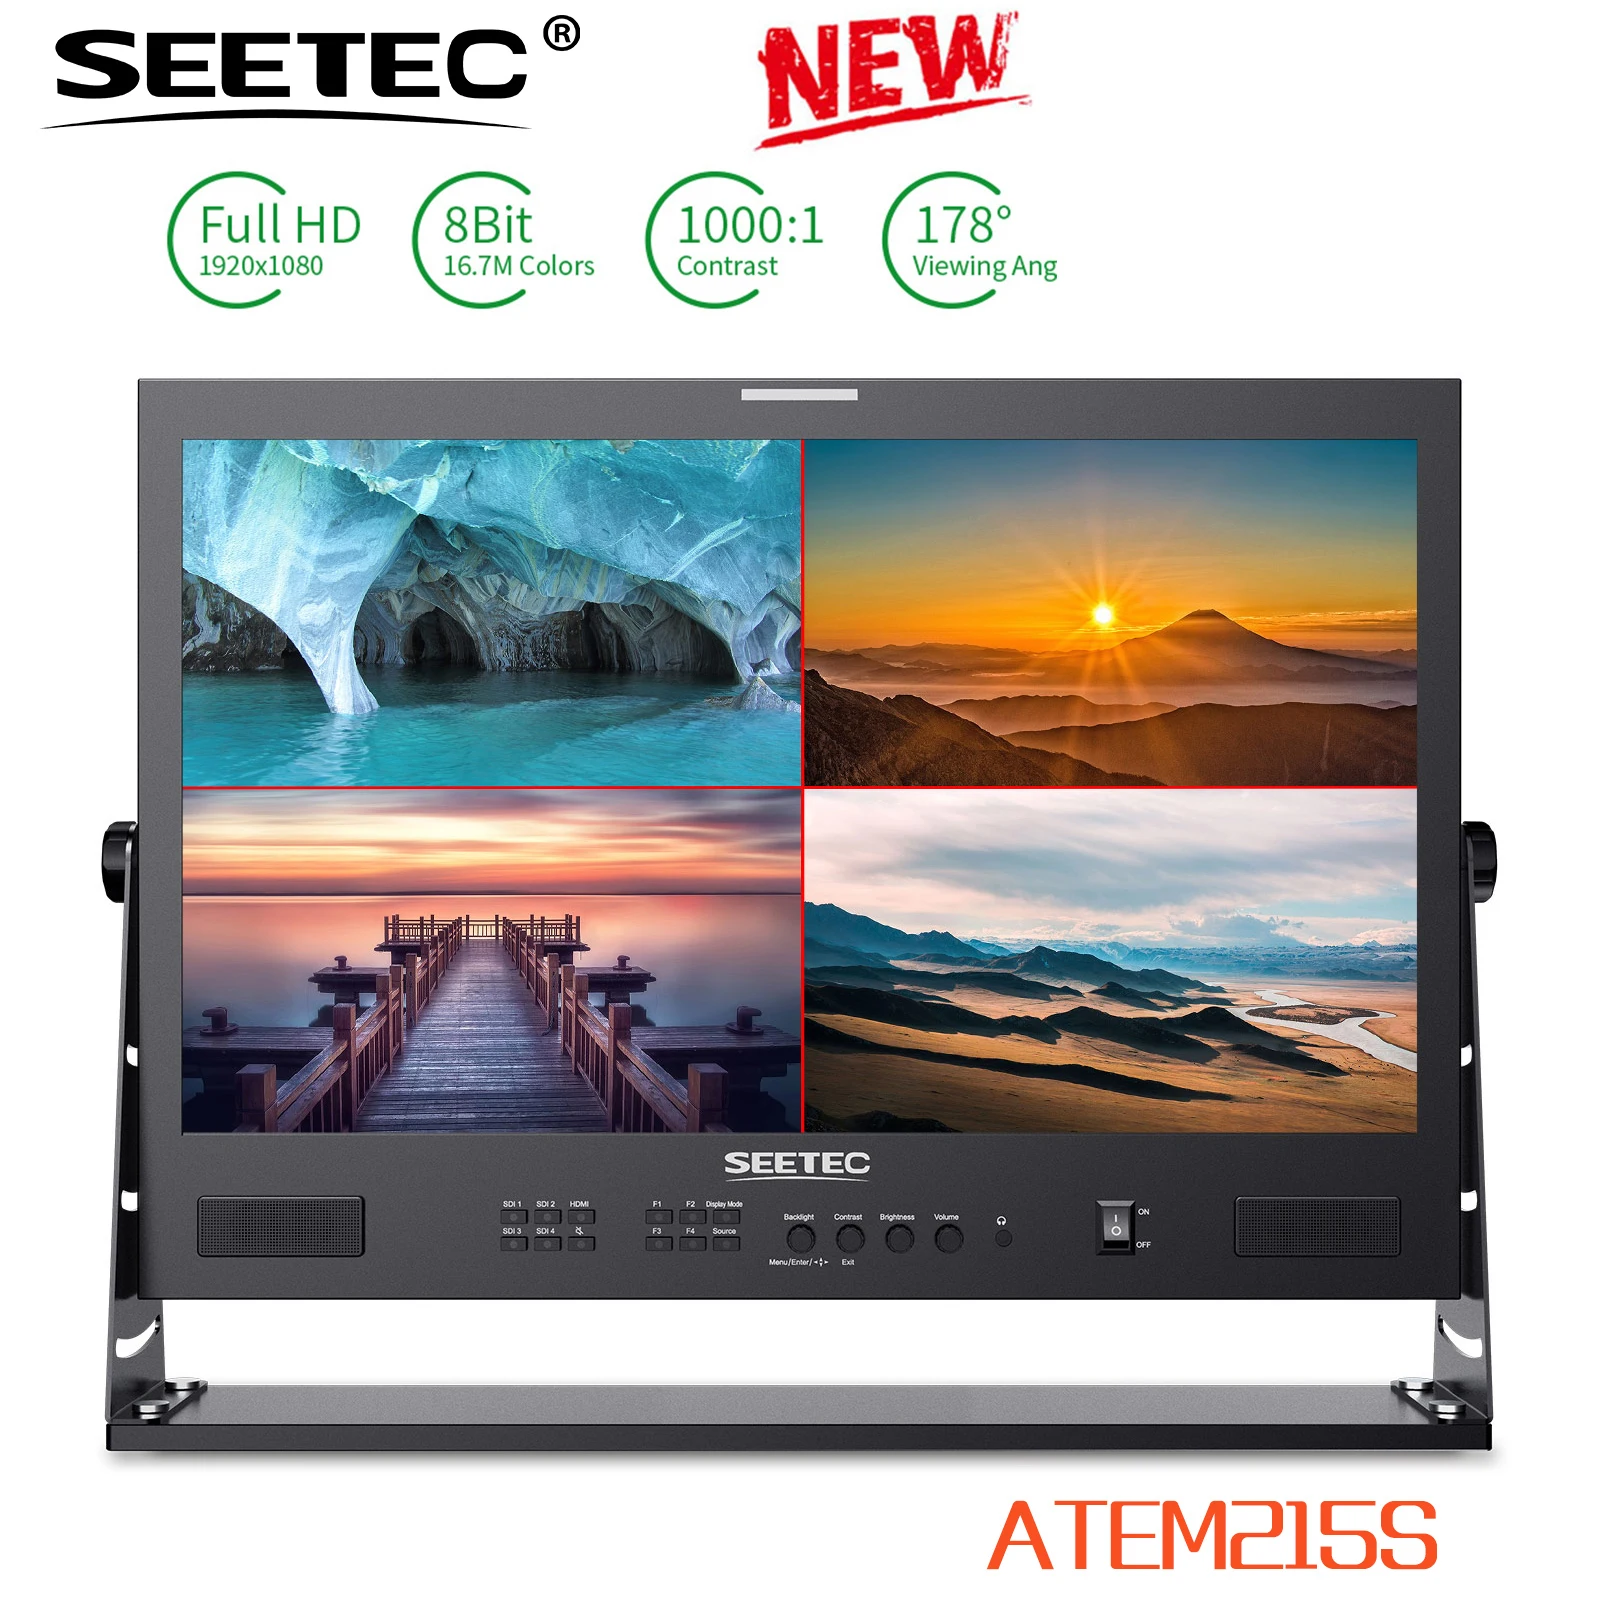 

SEETEC ATEM215S 21.5 inch Multi-camera Broadcast Monitor 3G-SDI HDMI 1920x1080 Full HD LCD 3D LUT HDR Waveform for Youtube Live